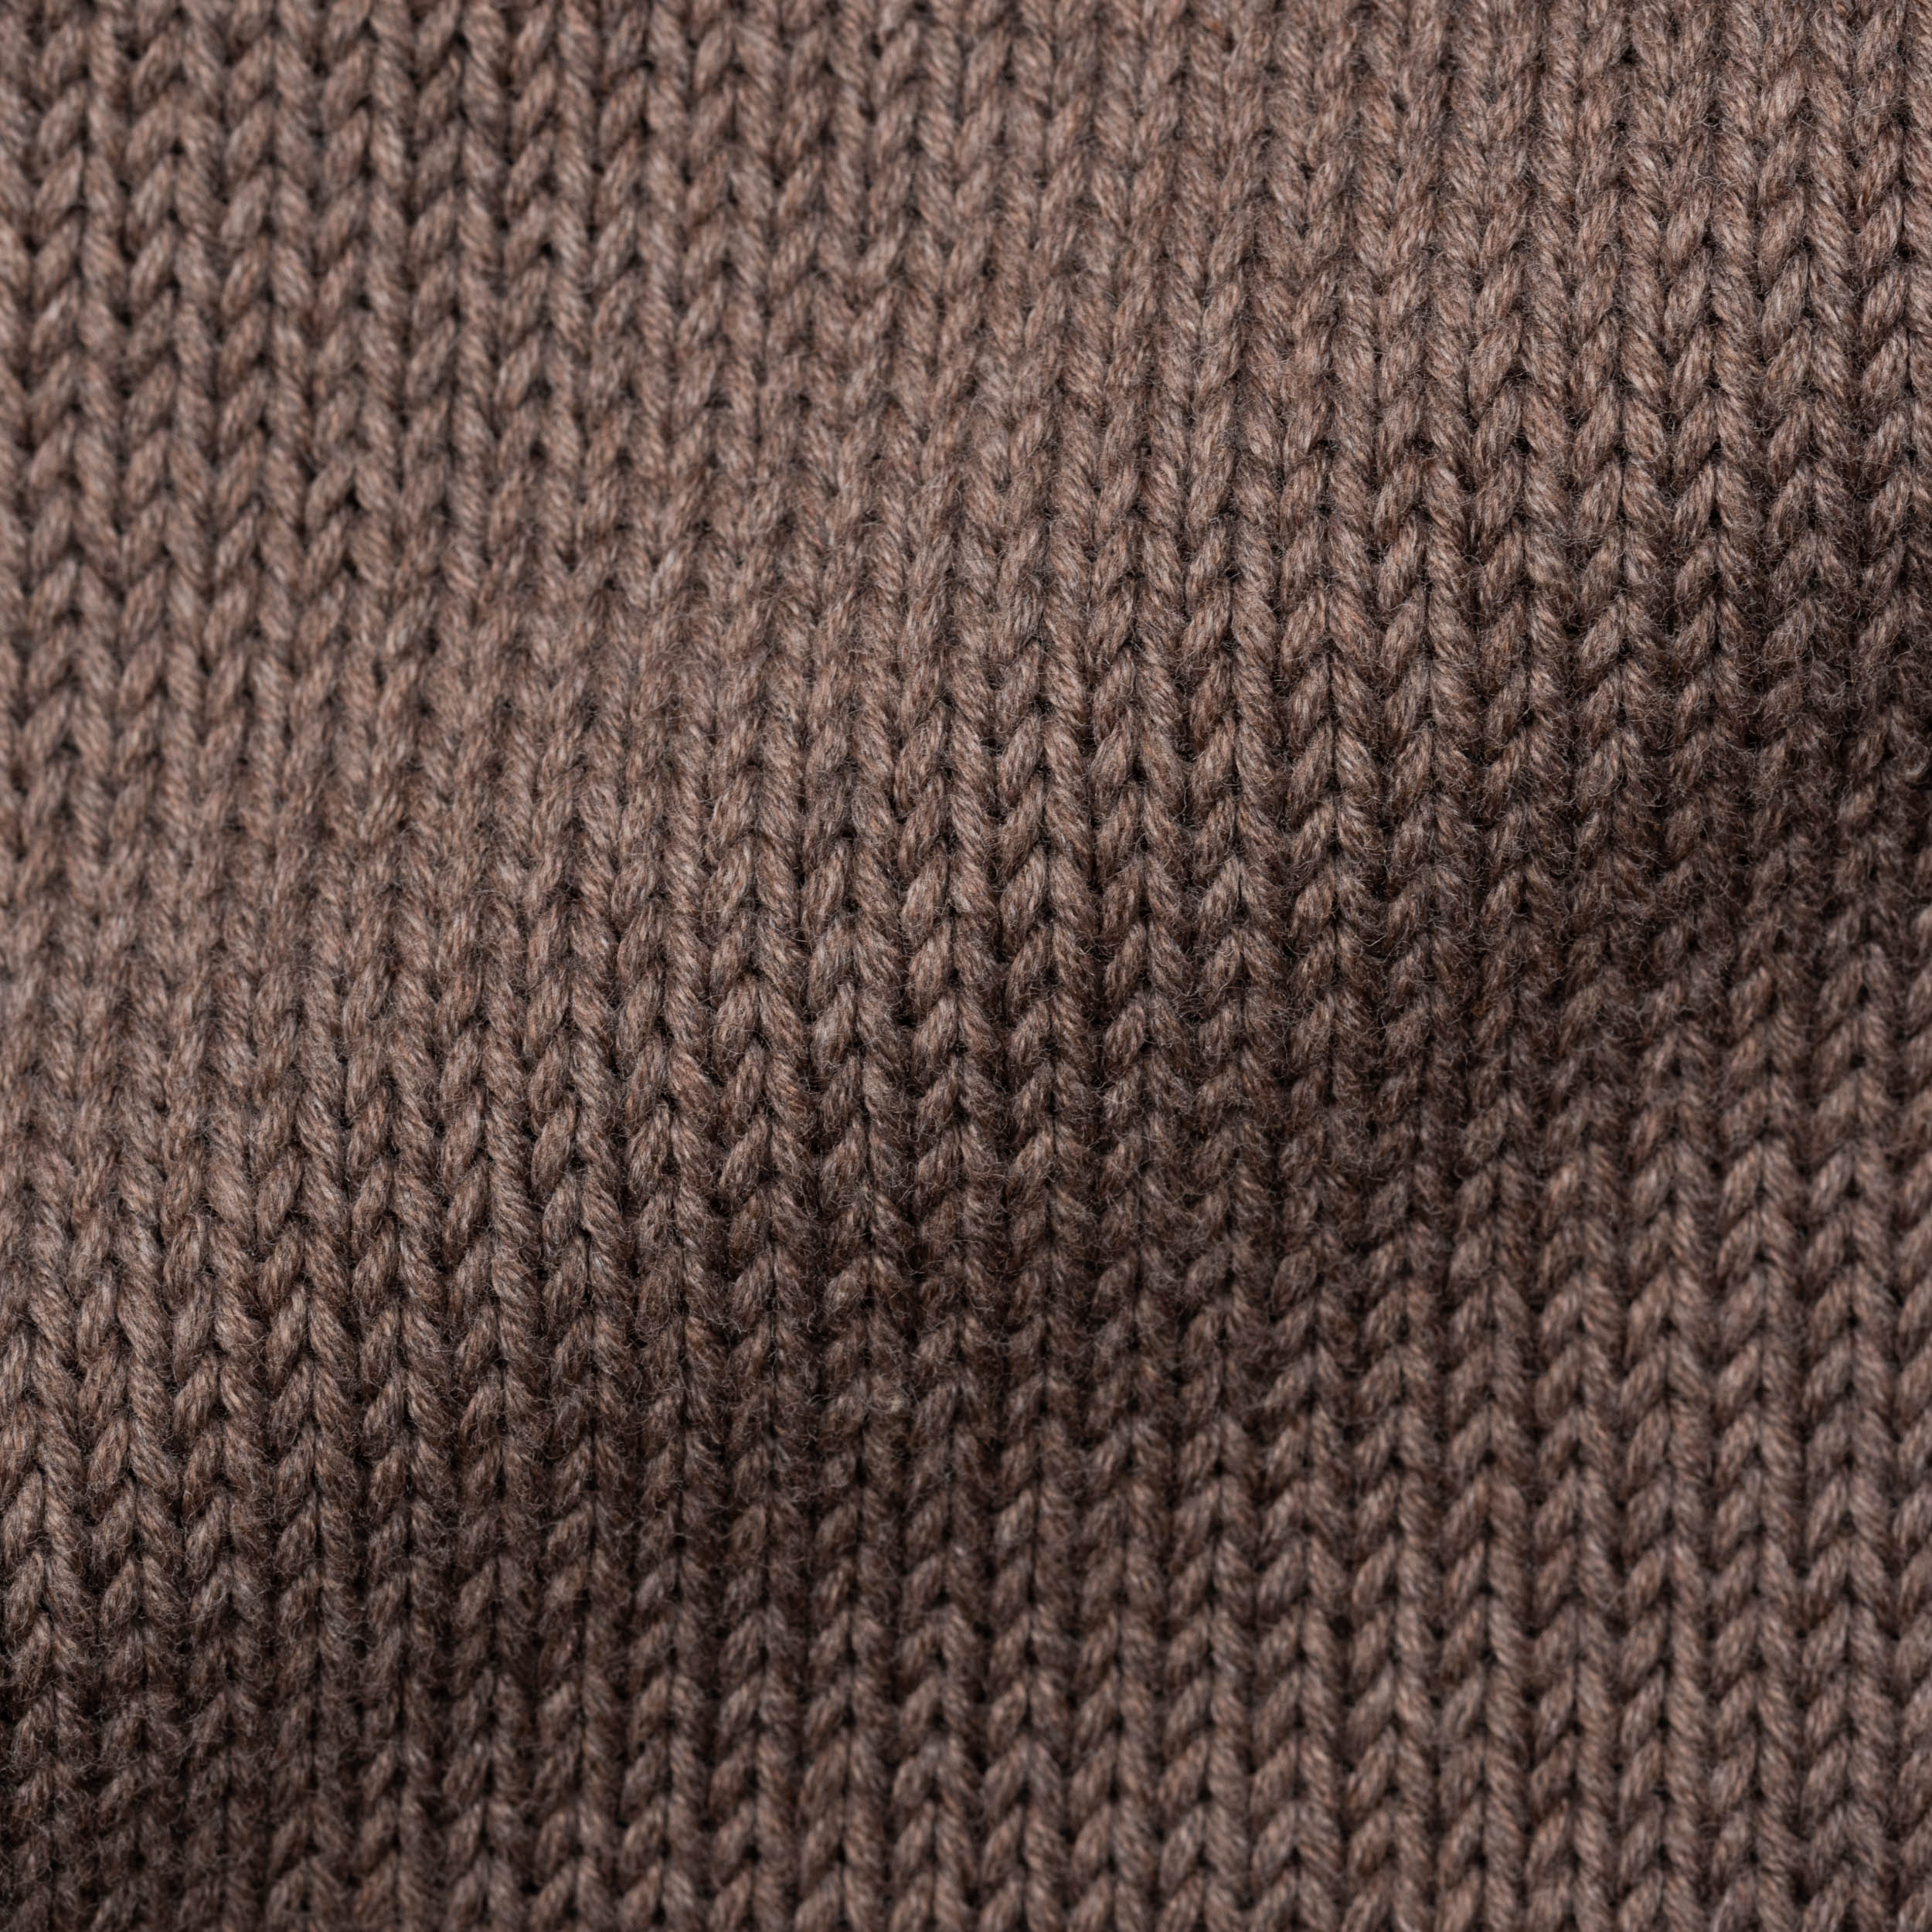 BRUNELLO CUCINELLI Brown Cotton Knitted Shawl Collar Cardigan Sweater EU 50 US M BRUNELLO CUCINELLI